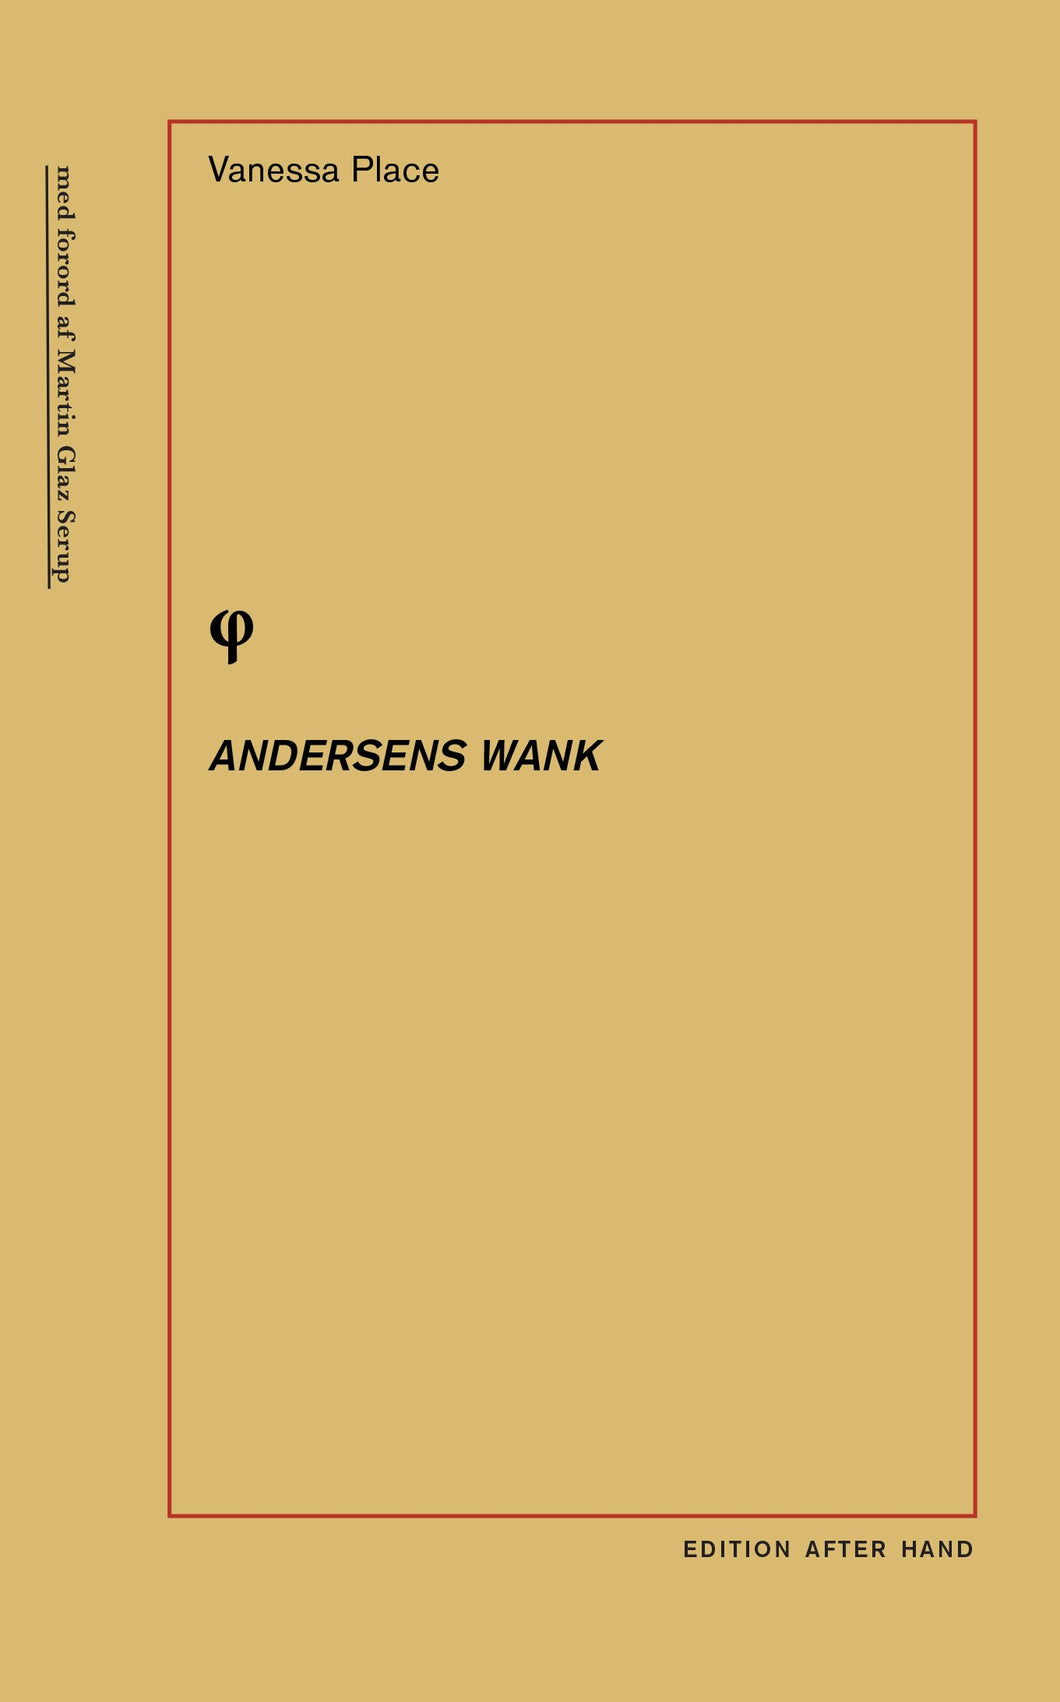 Vanessa Place: Andersens Wank